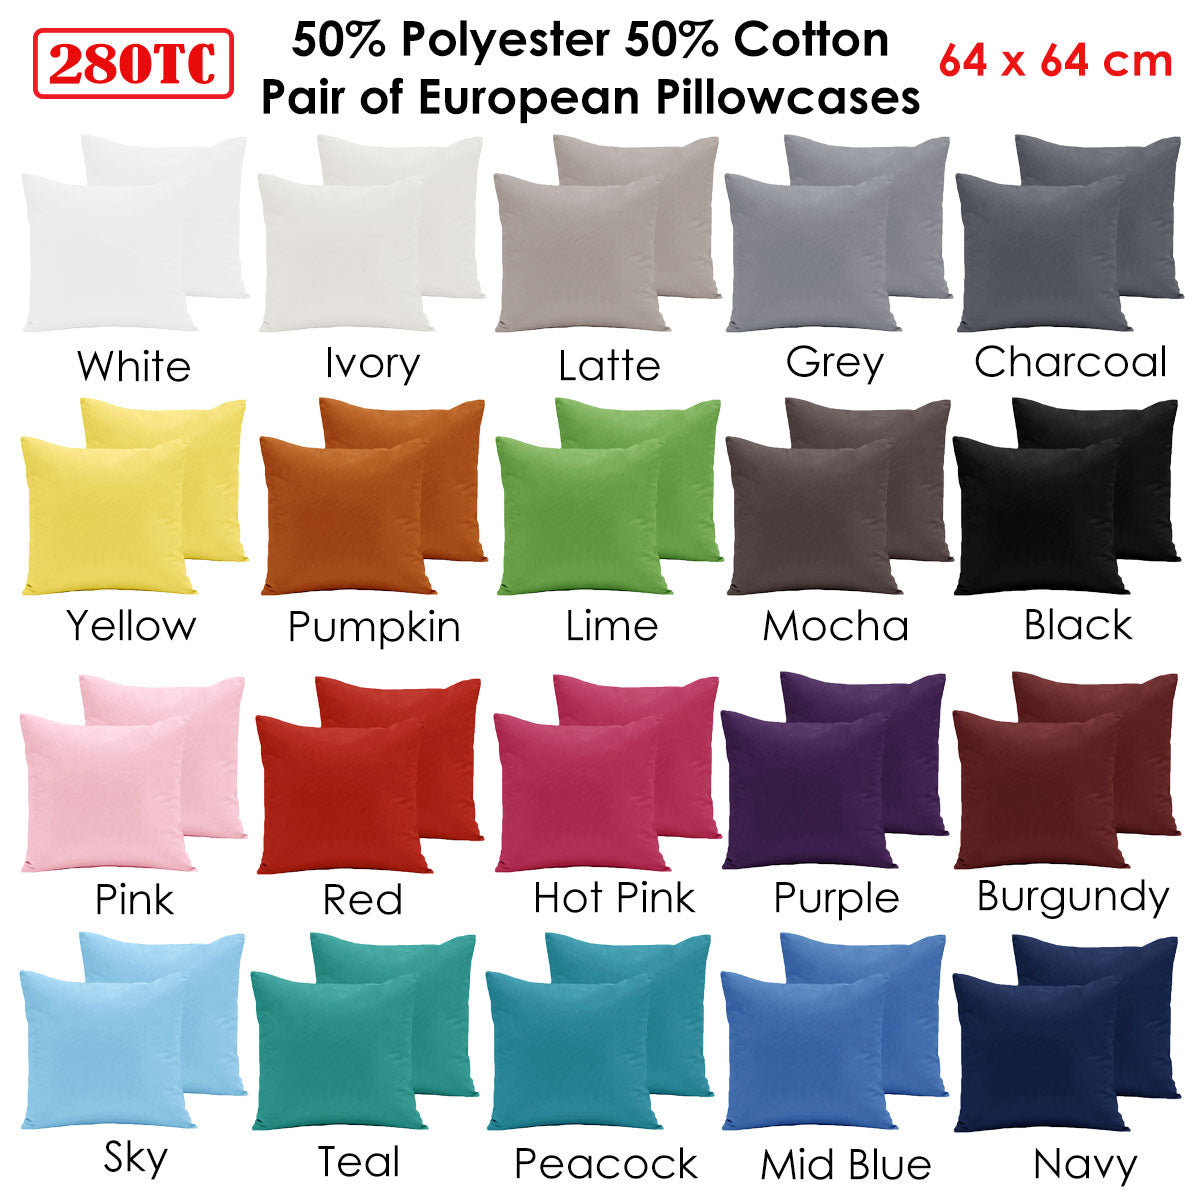 Pair of  280TC Polyester Cotton European Pillowcases Charcoal